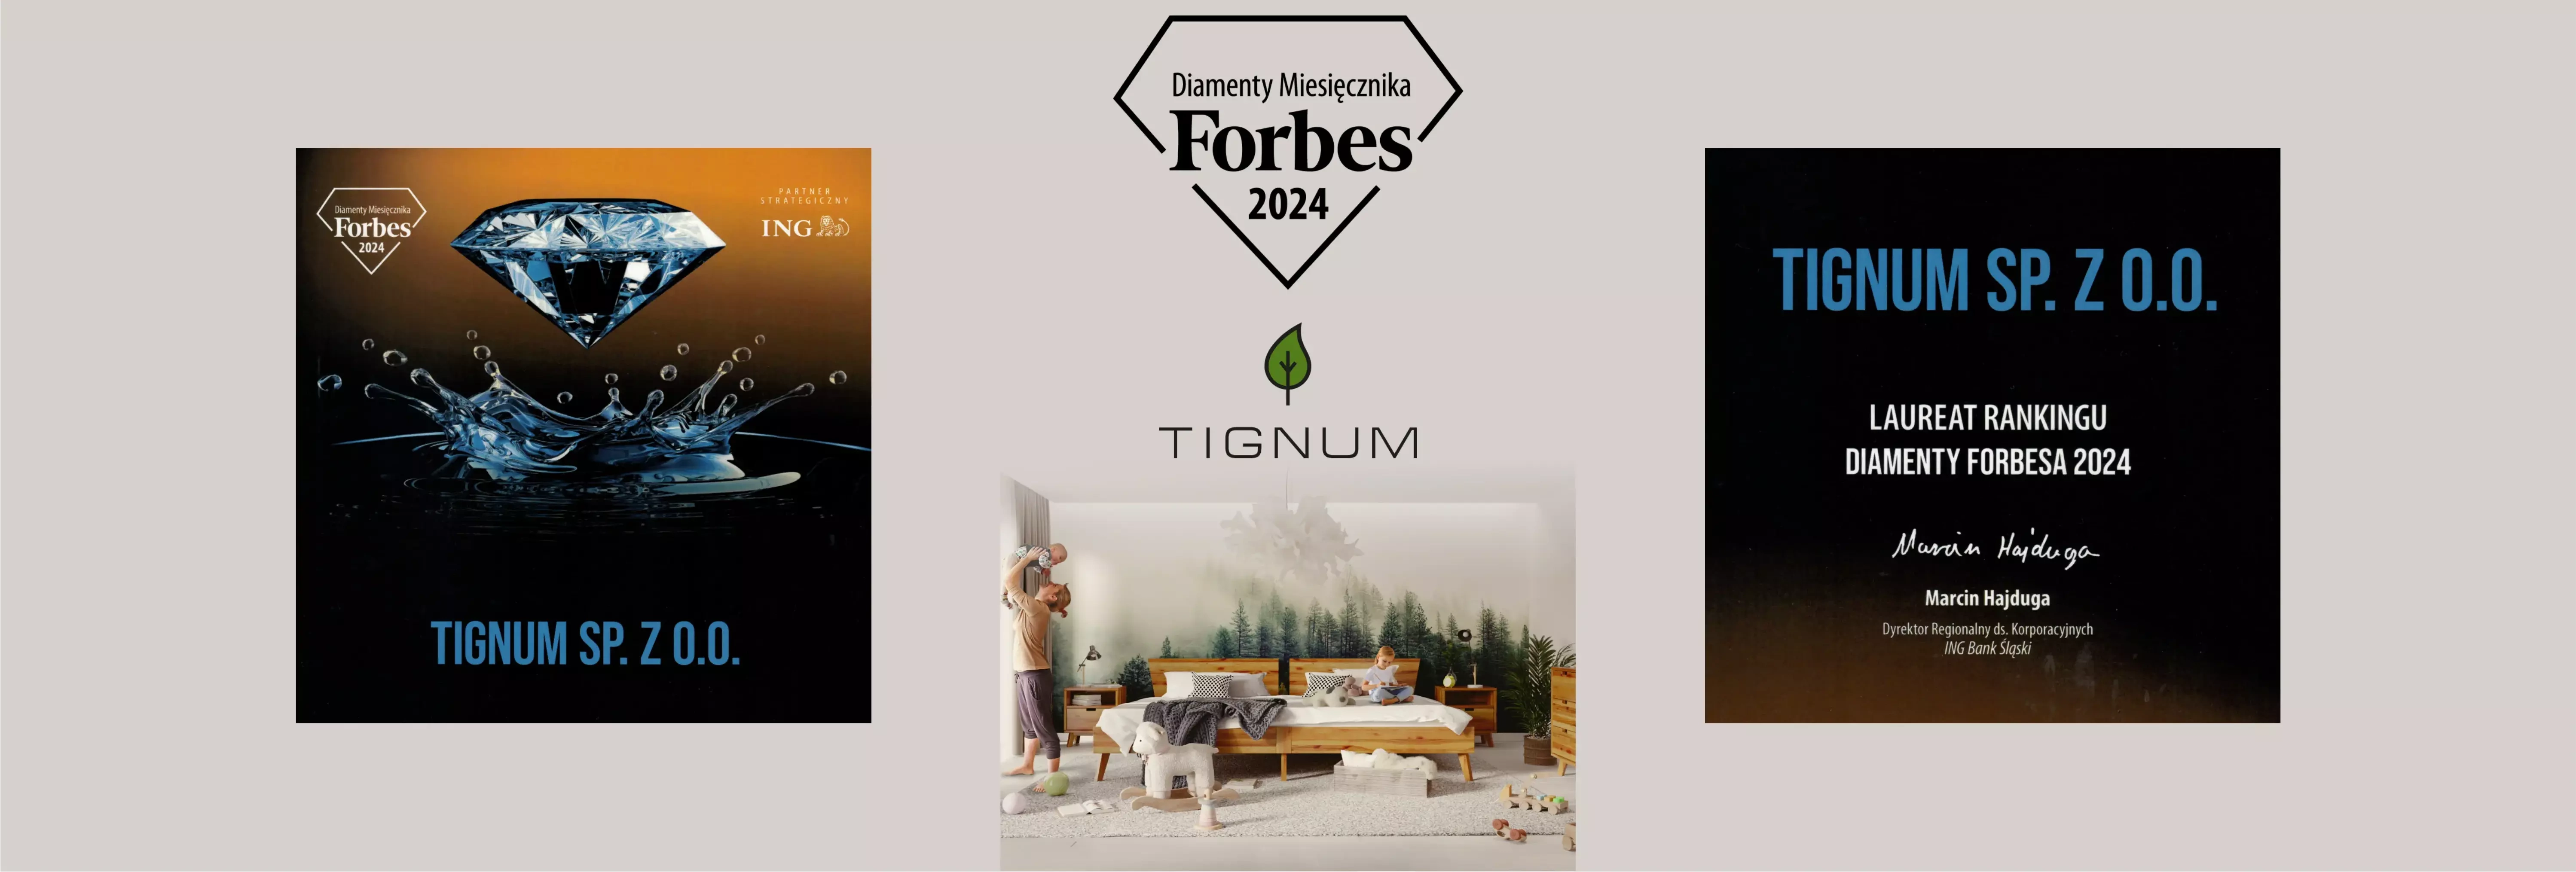 Tignum-Diamenty-Forbesa-2024